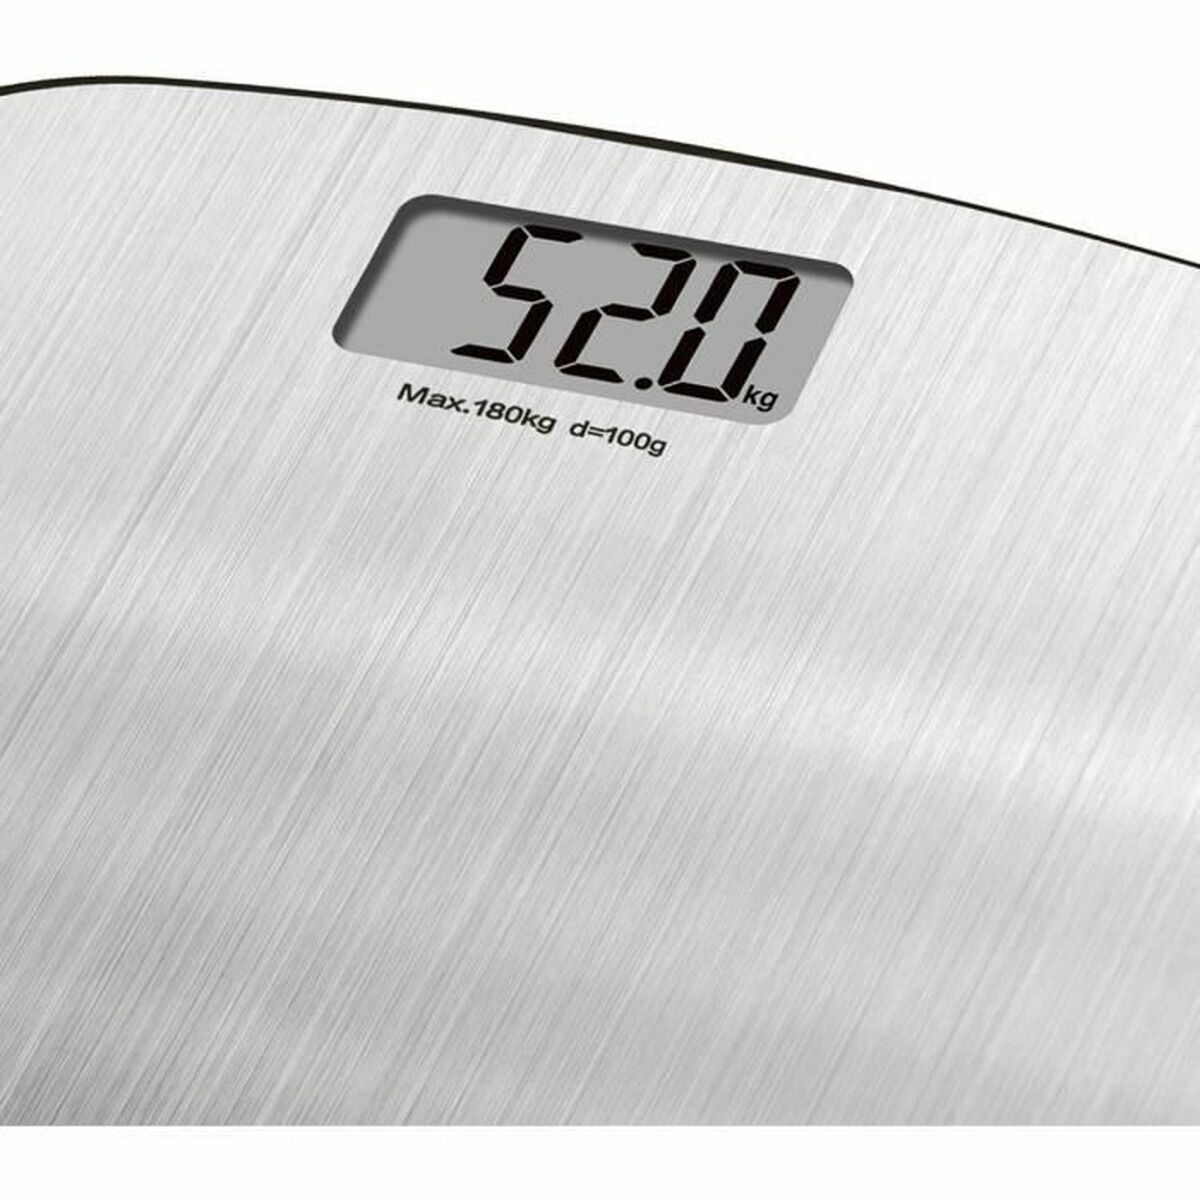 Digital Bathroom Scales Little Balance 8416 Stainless steel 180 kg (30 x 30 cm)